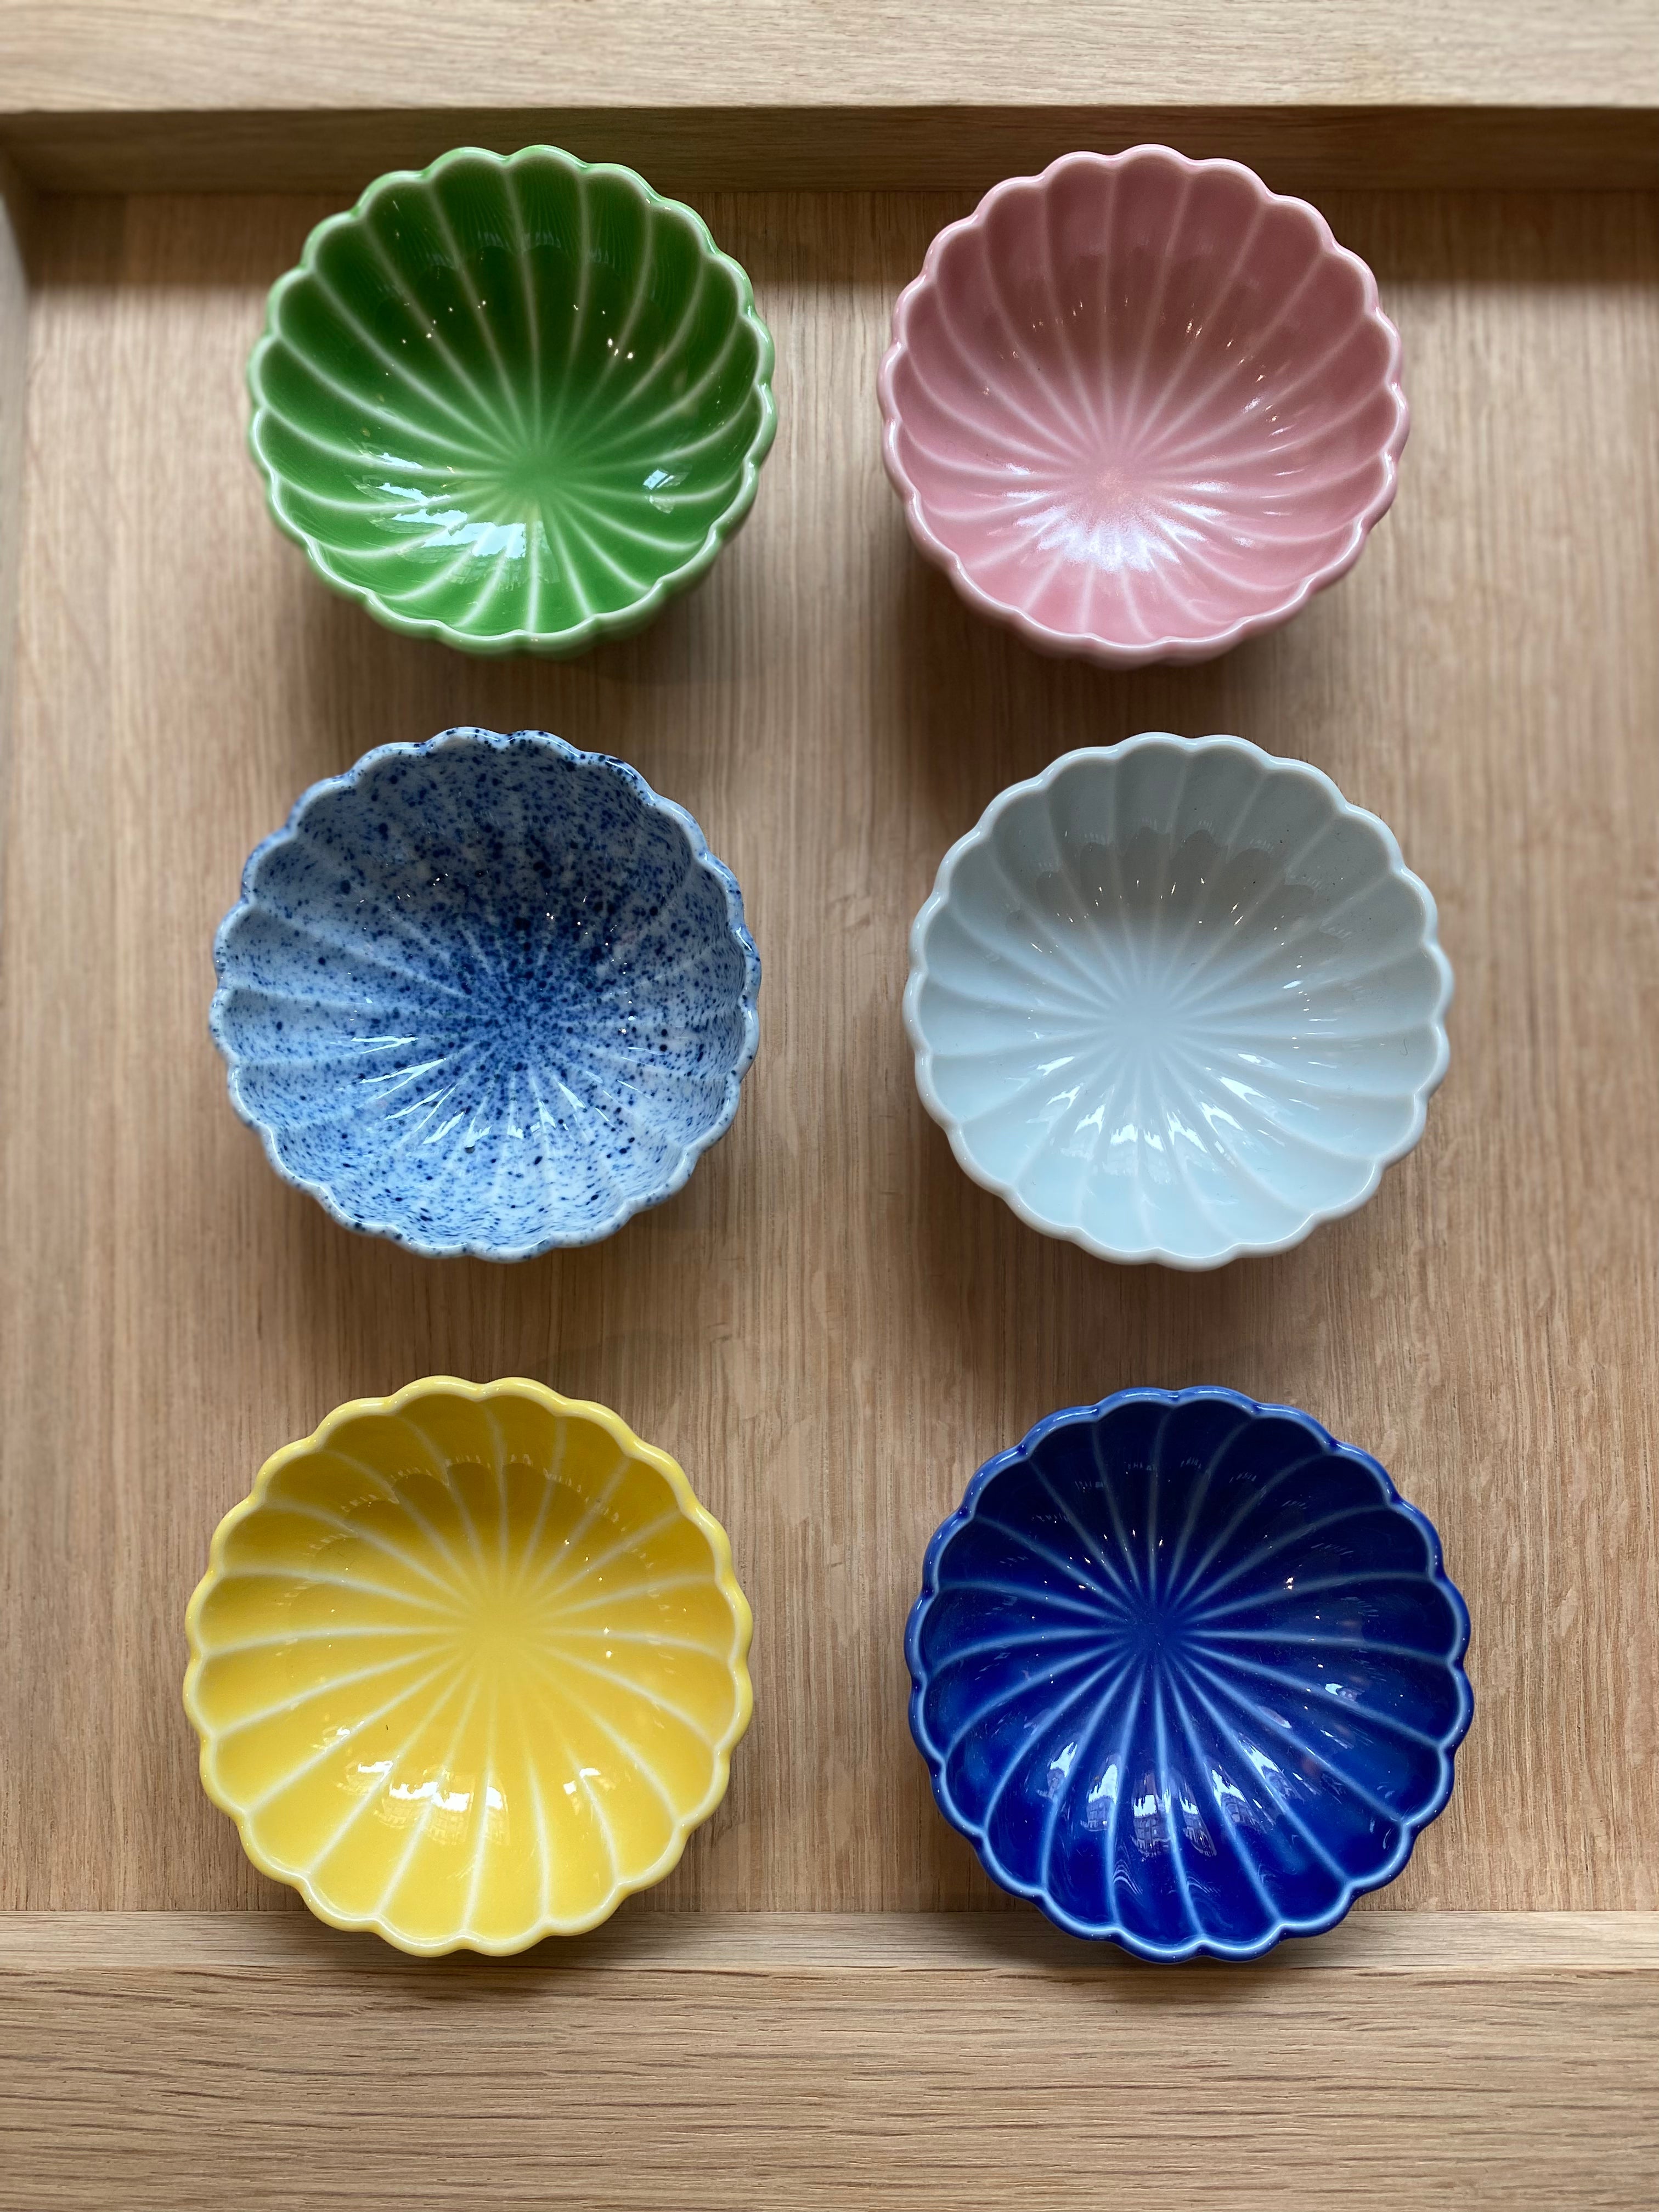 Flower bowls